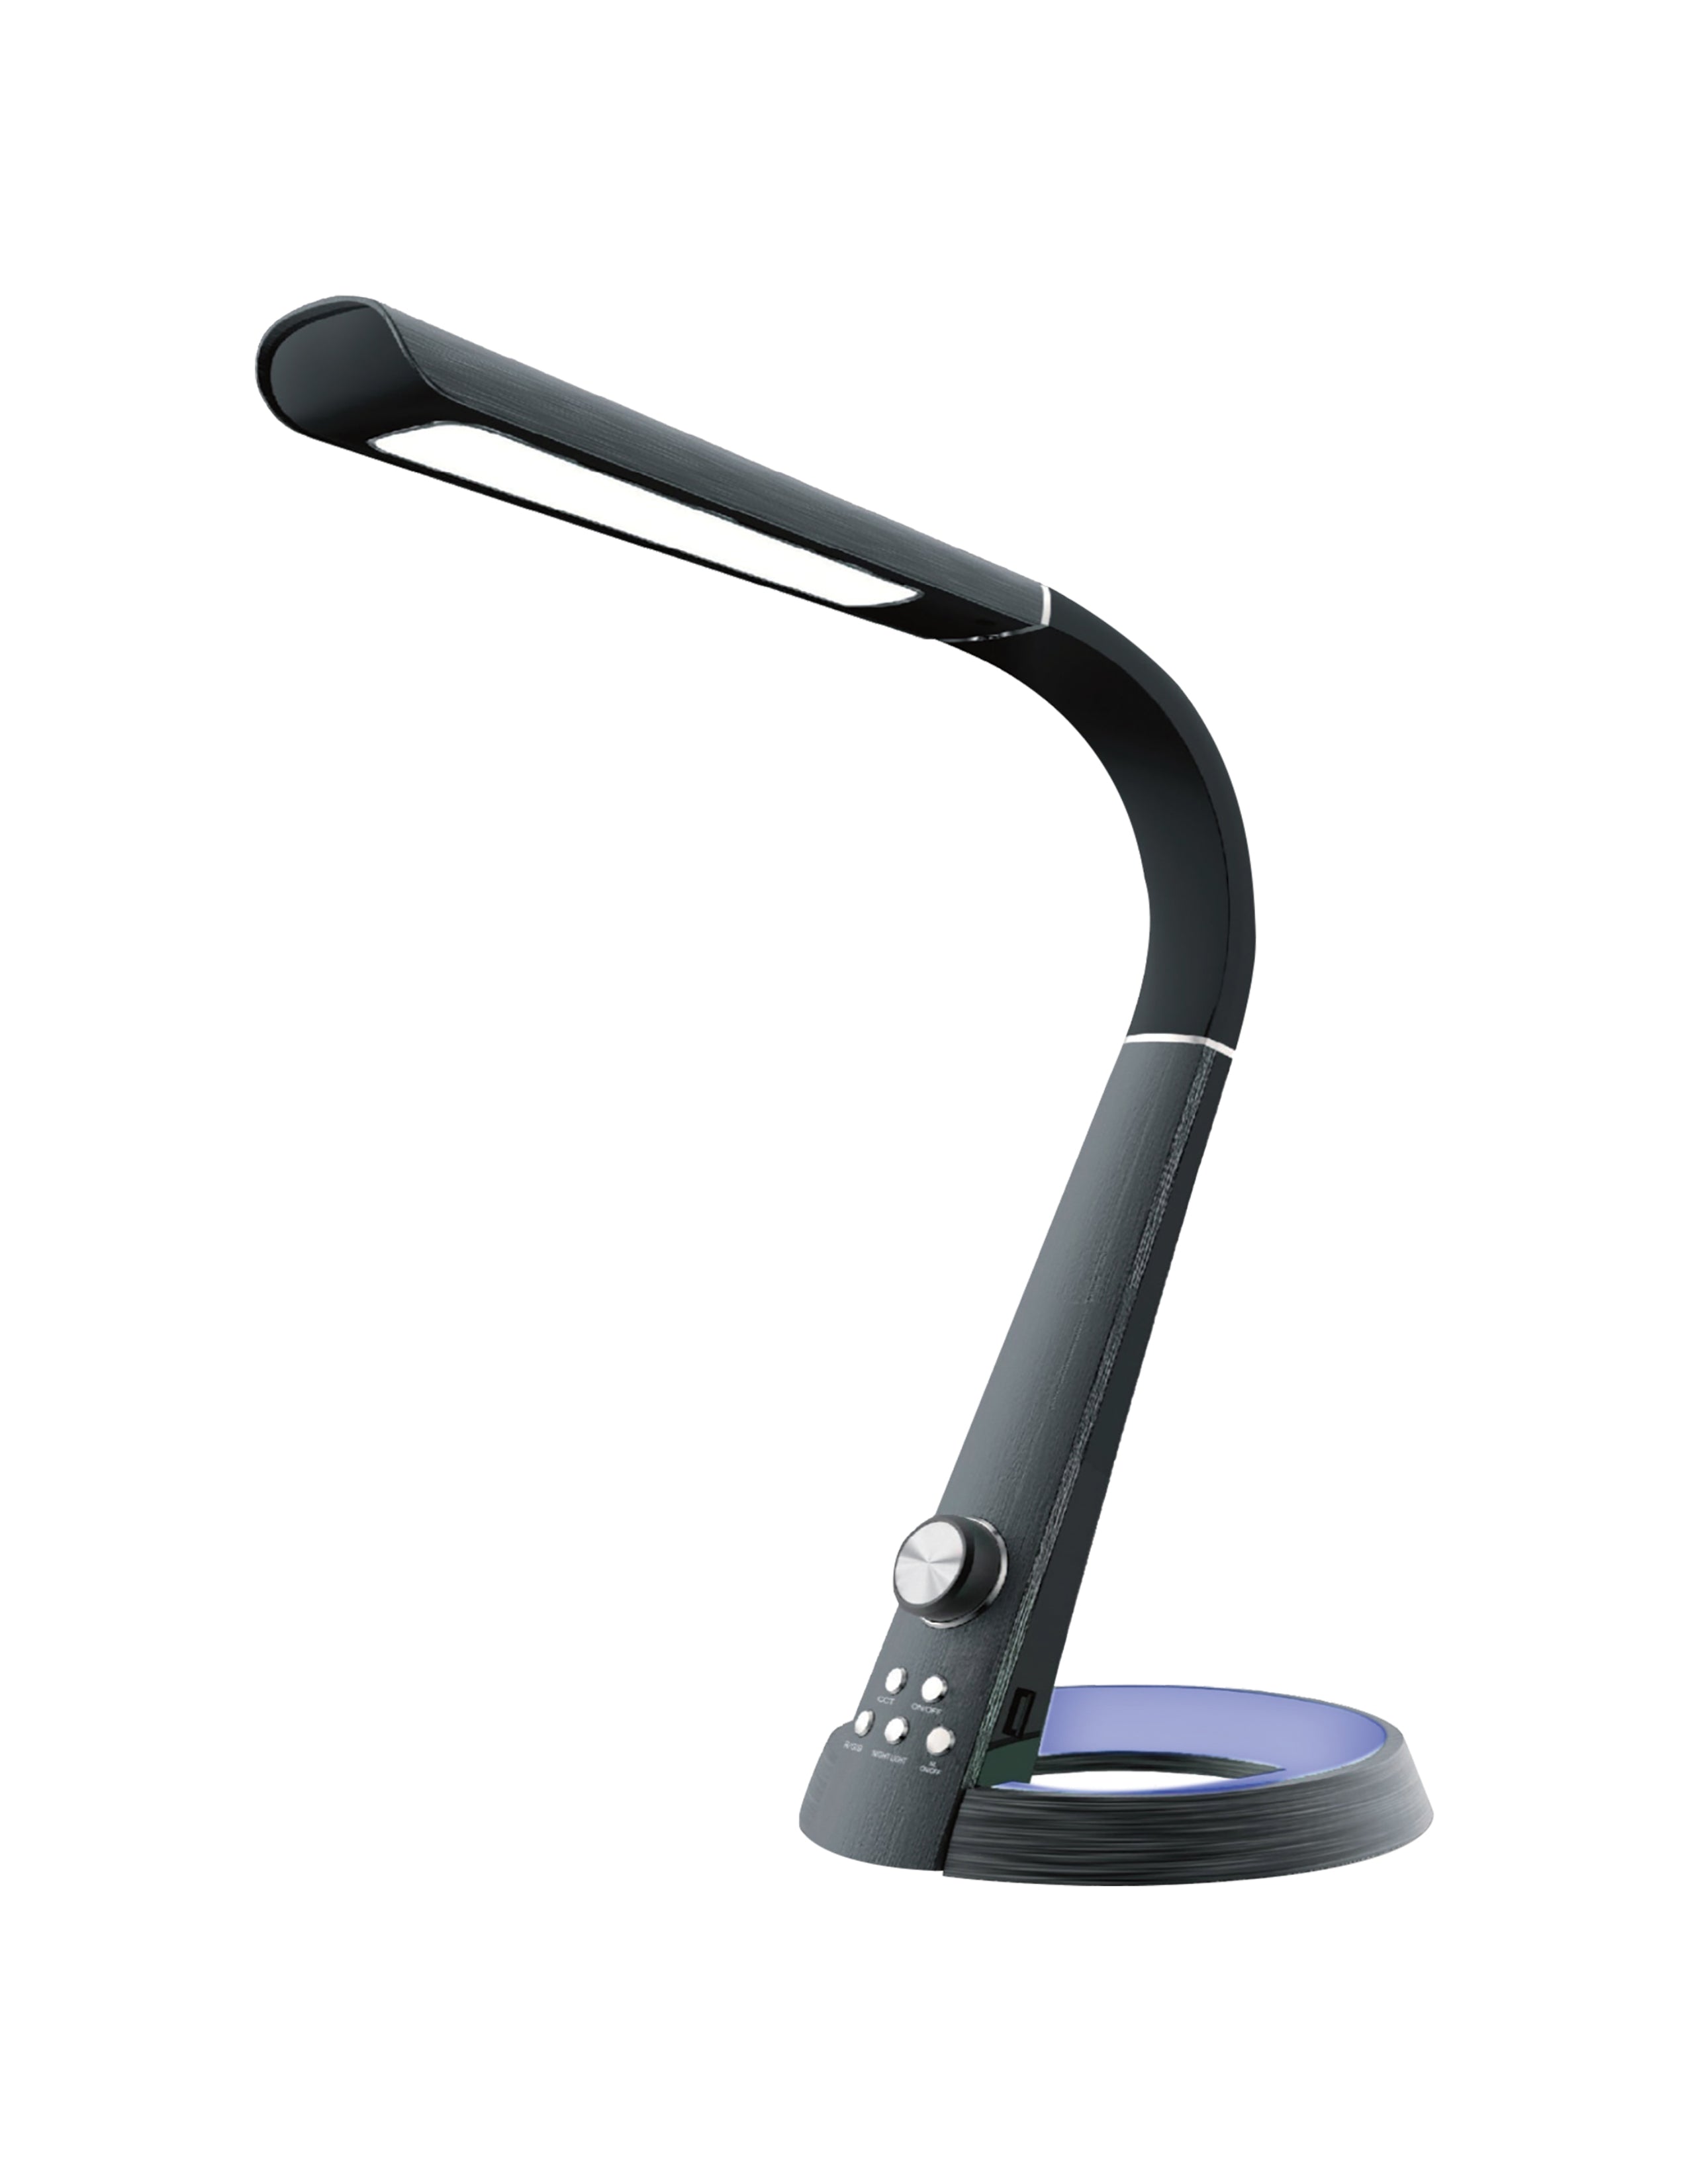 RDL-110U/ LED Desk Lamp with USB and Night Light